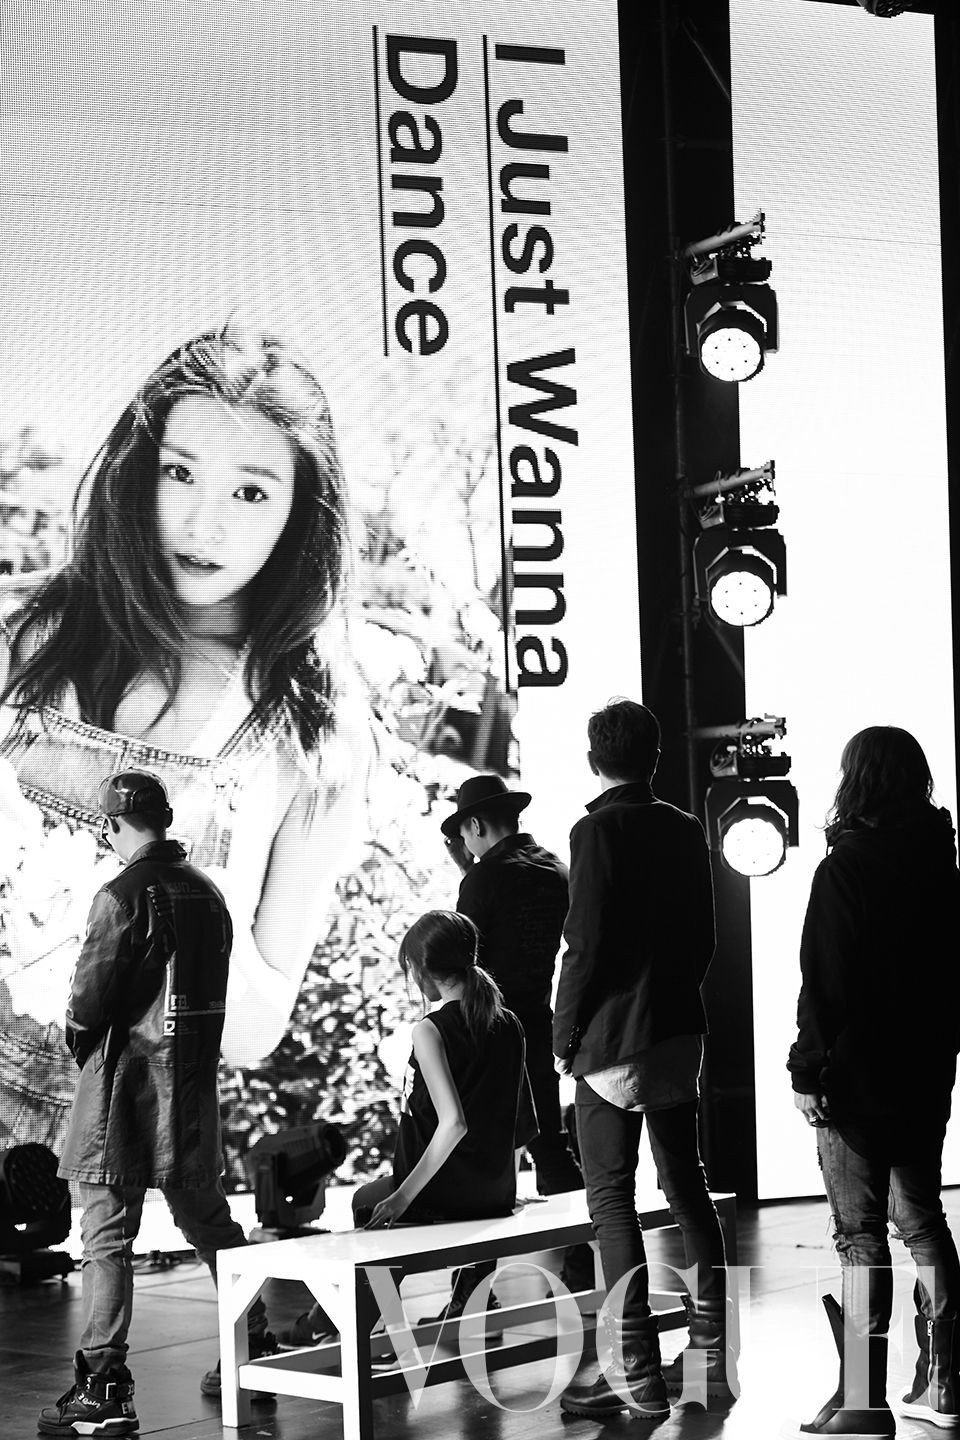 [PIC][10-05-2016]Tiffany tham dự Showcase ra mắt Mini Album "I Just Wanna Dance" vào tối nay - Page 2 ZJDwtuH7bA-3000x3000